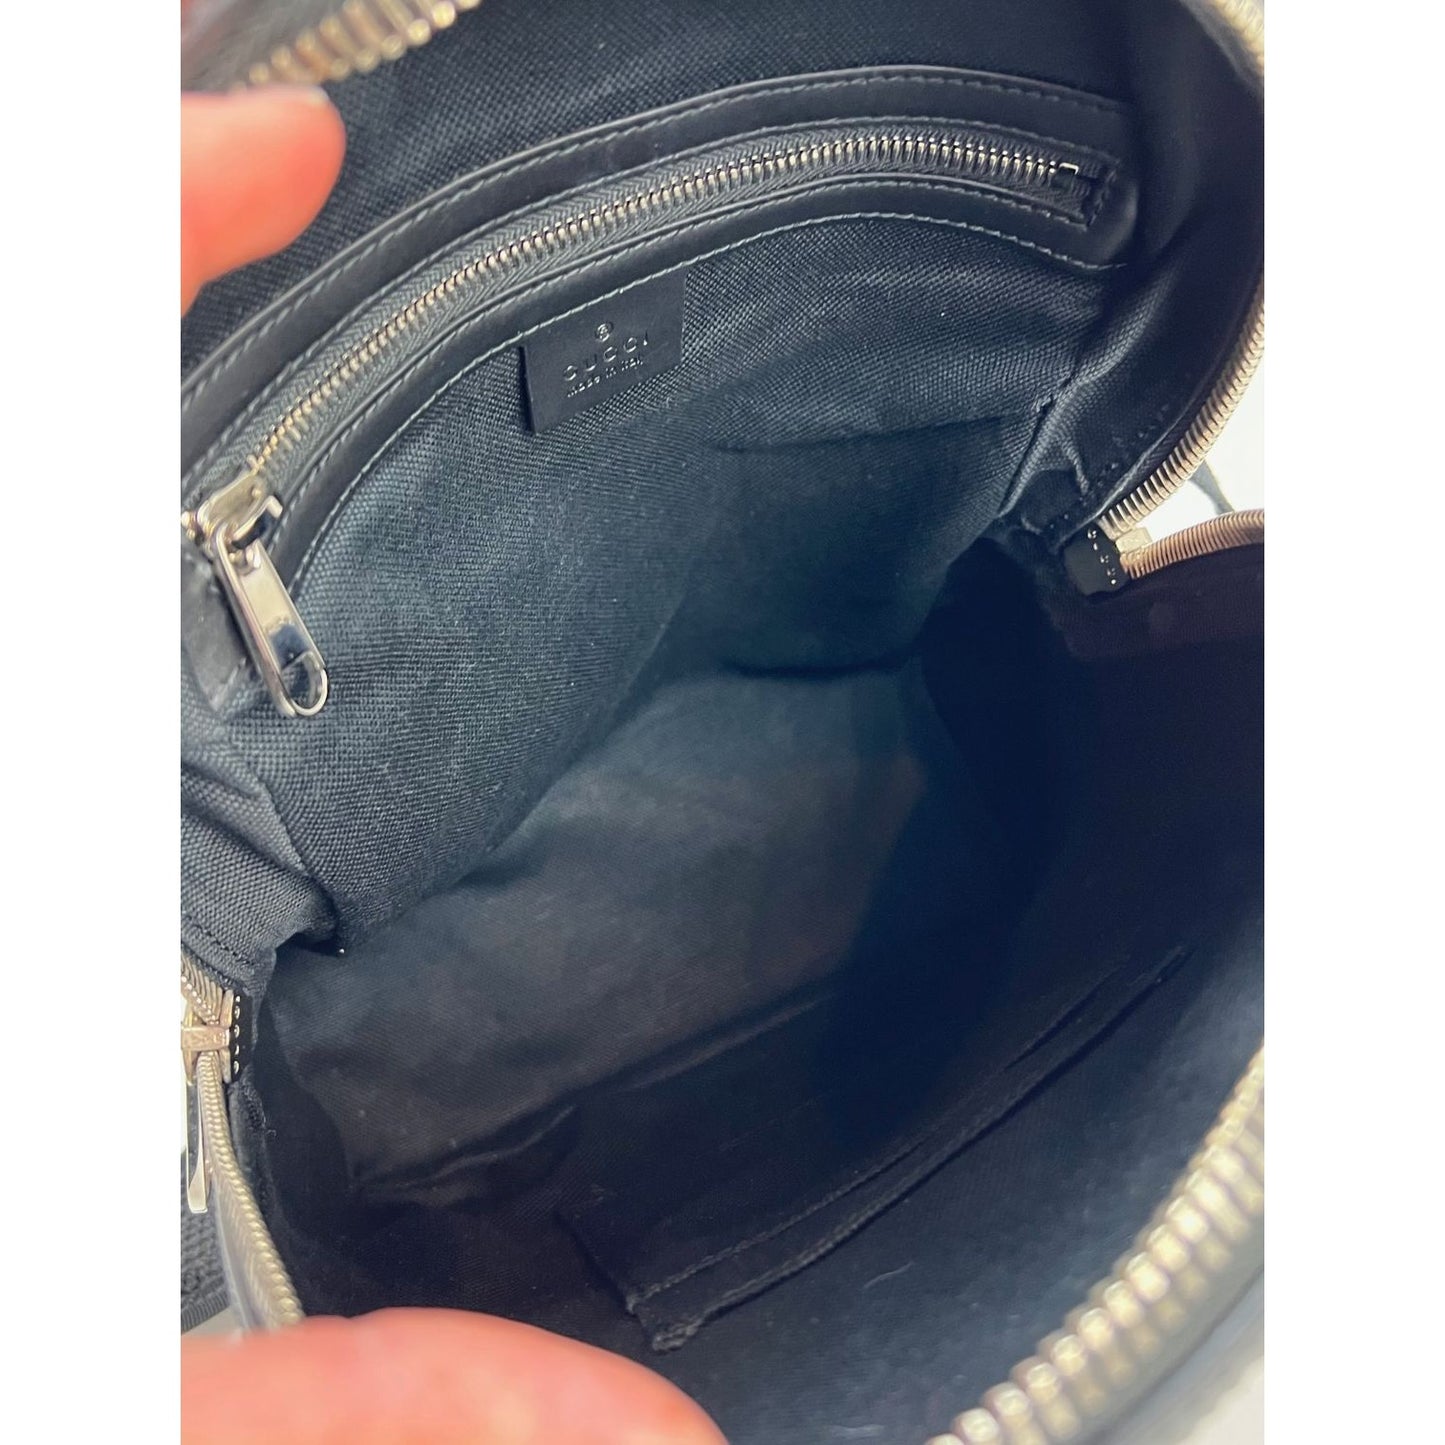 Louis Vuitton Supreme Authenticated Leather Handbag